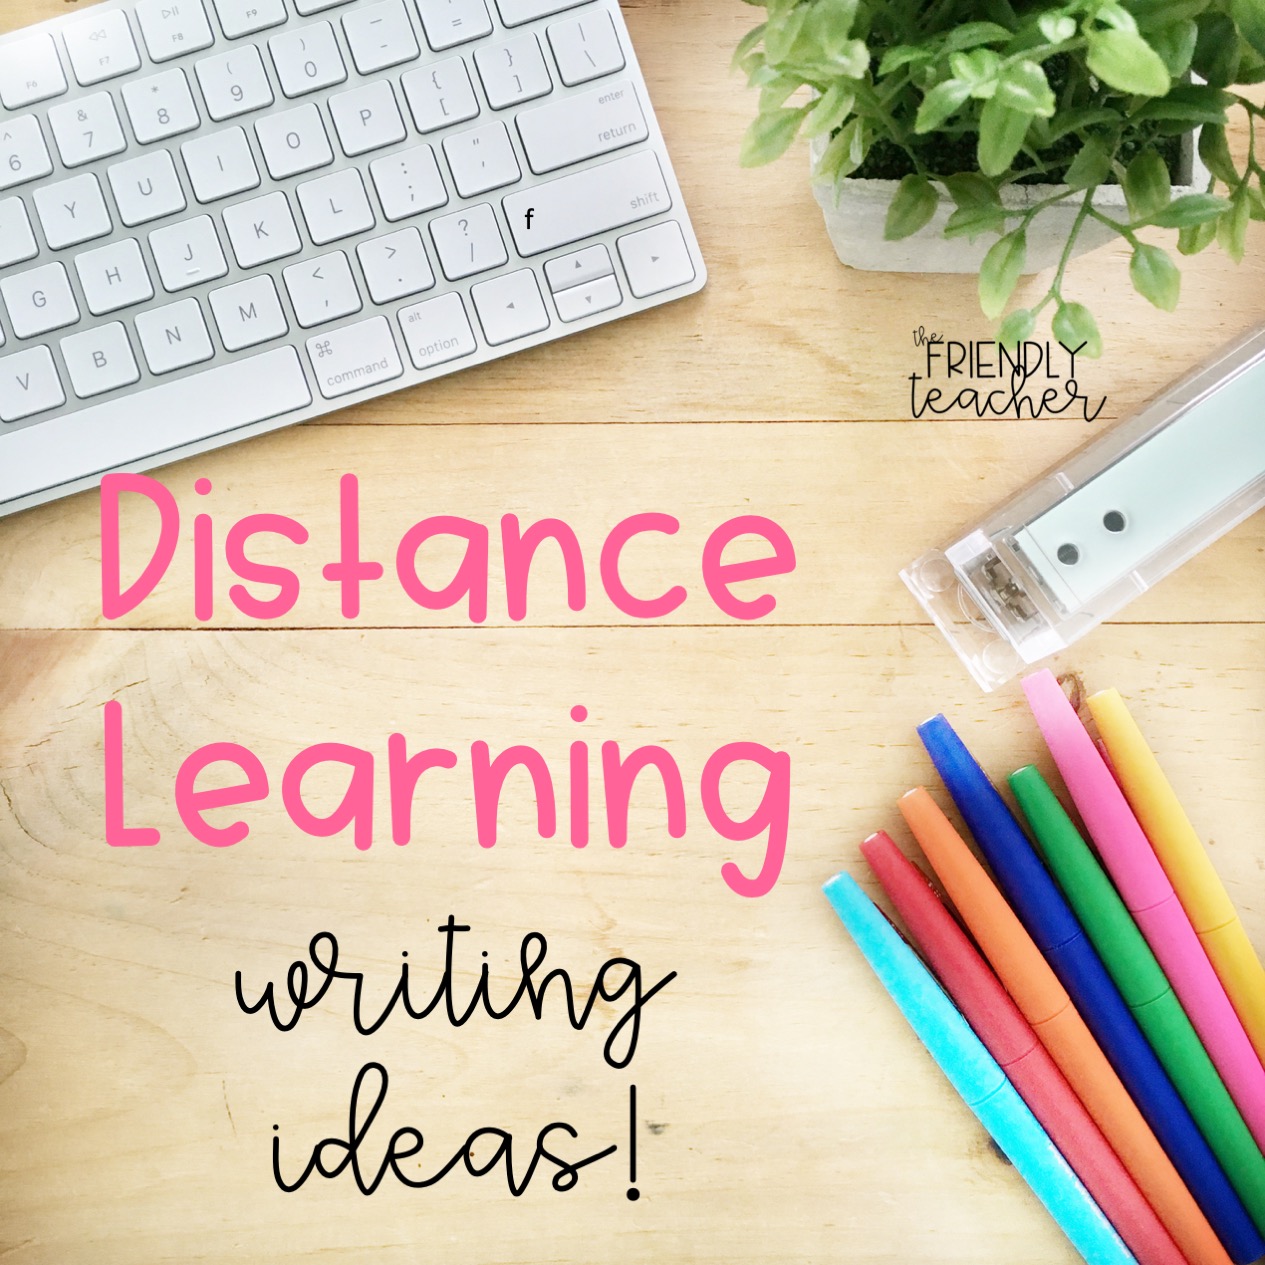 Digital Learning Writing Ideas